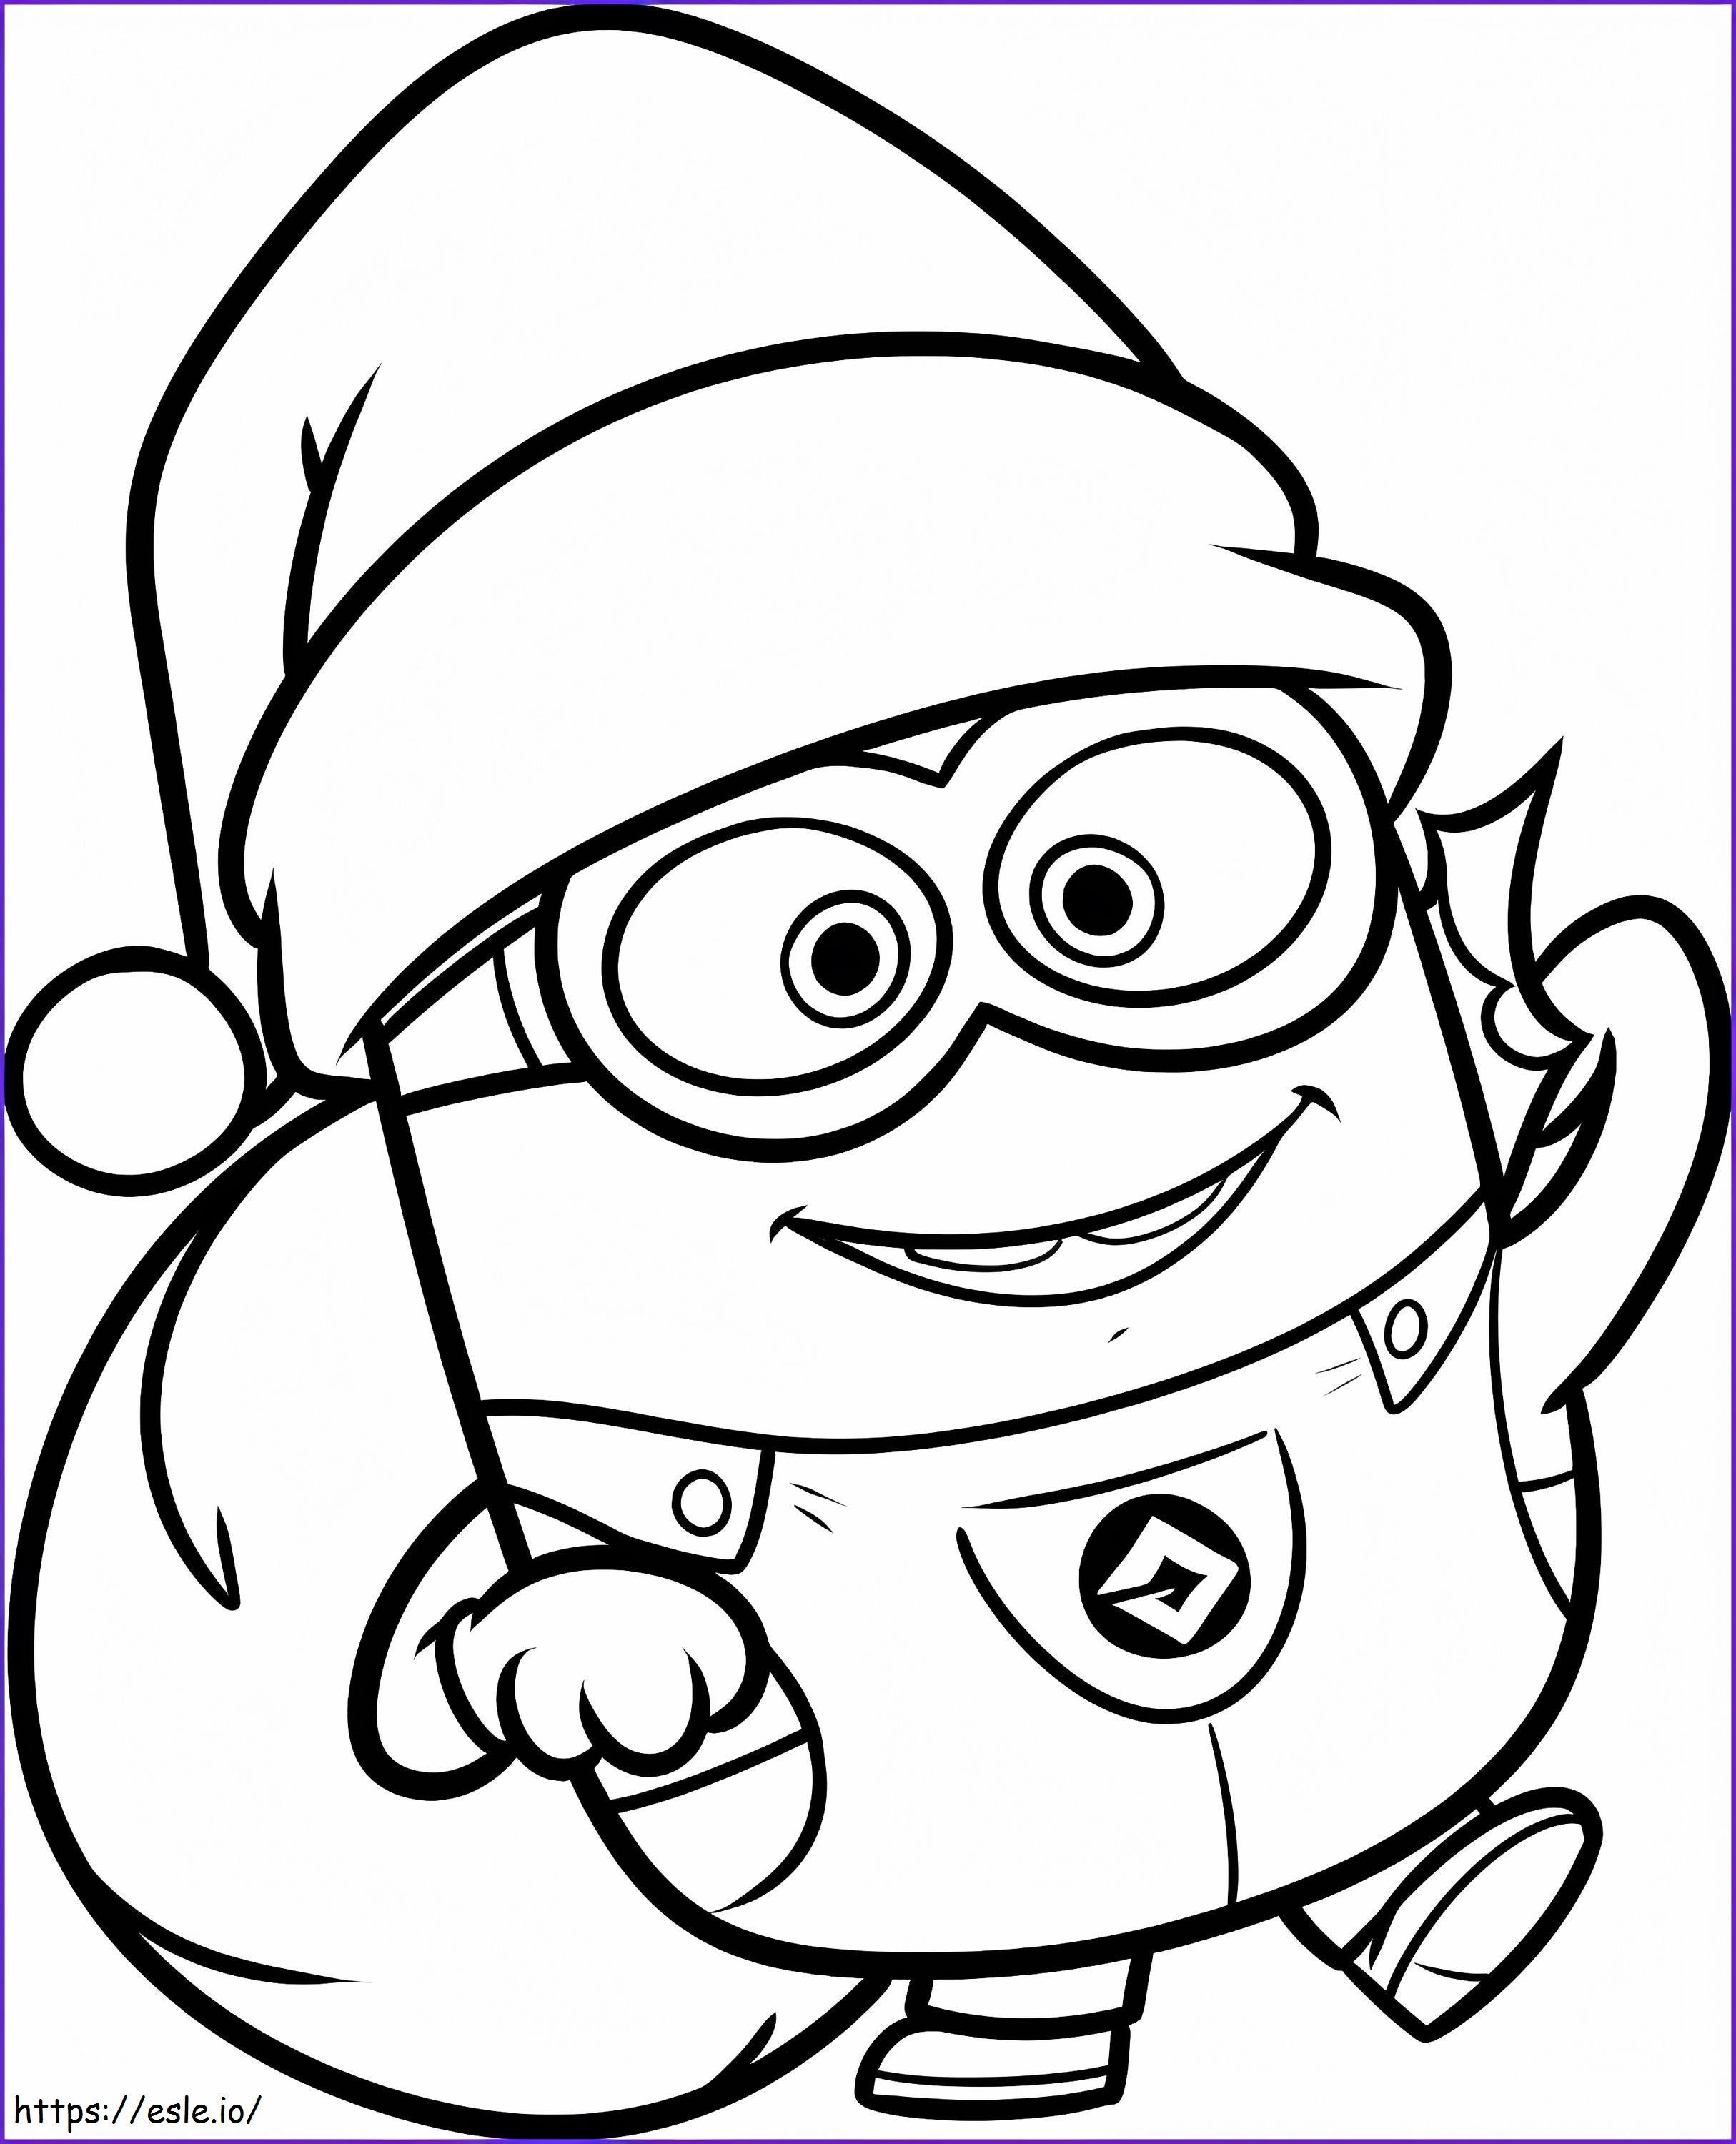 Minions At Christmas coloring page